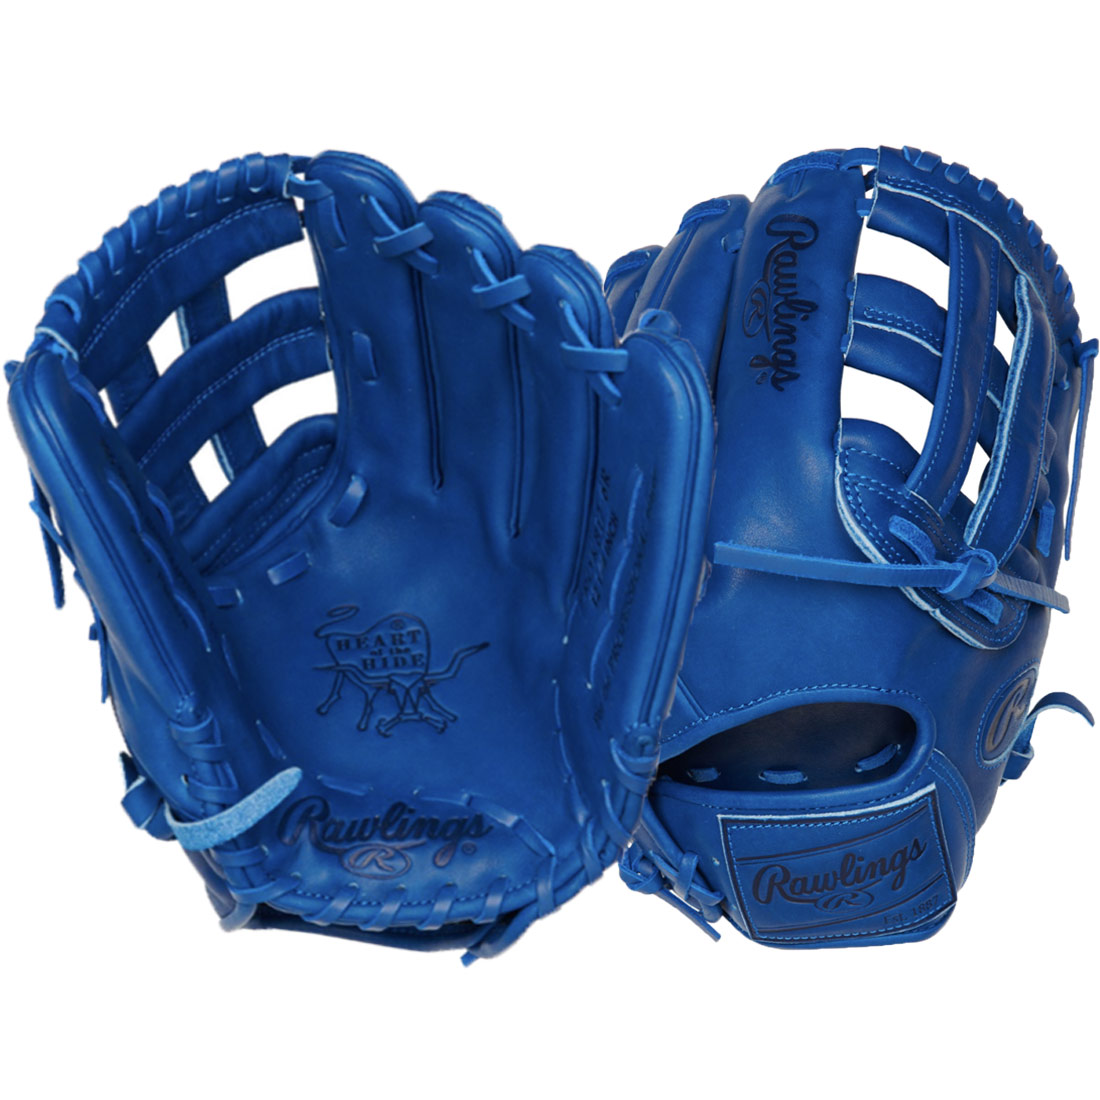 Rawlings Pro Label Heart of the Hide Kris Bryant Baseball Glove 12.25\" PROKB17-6R